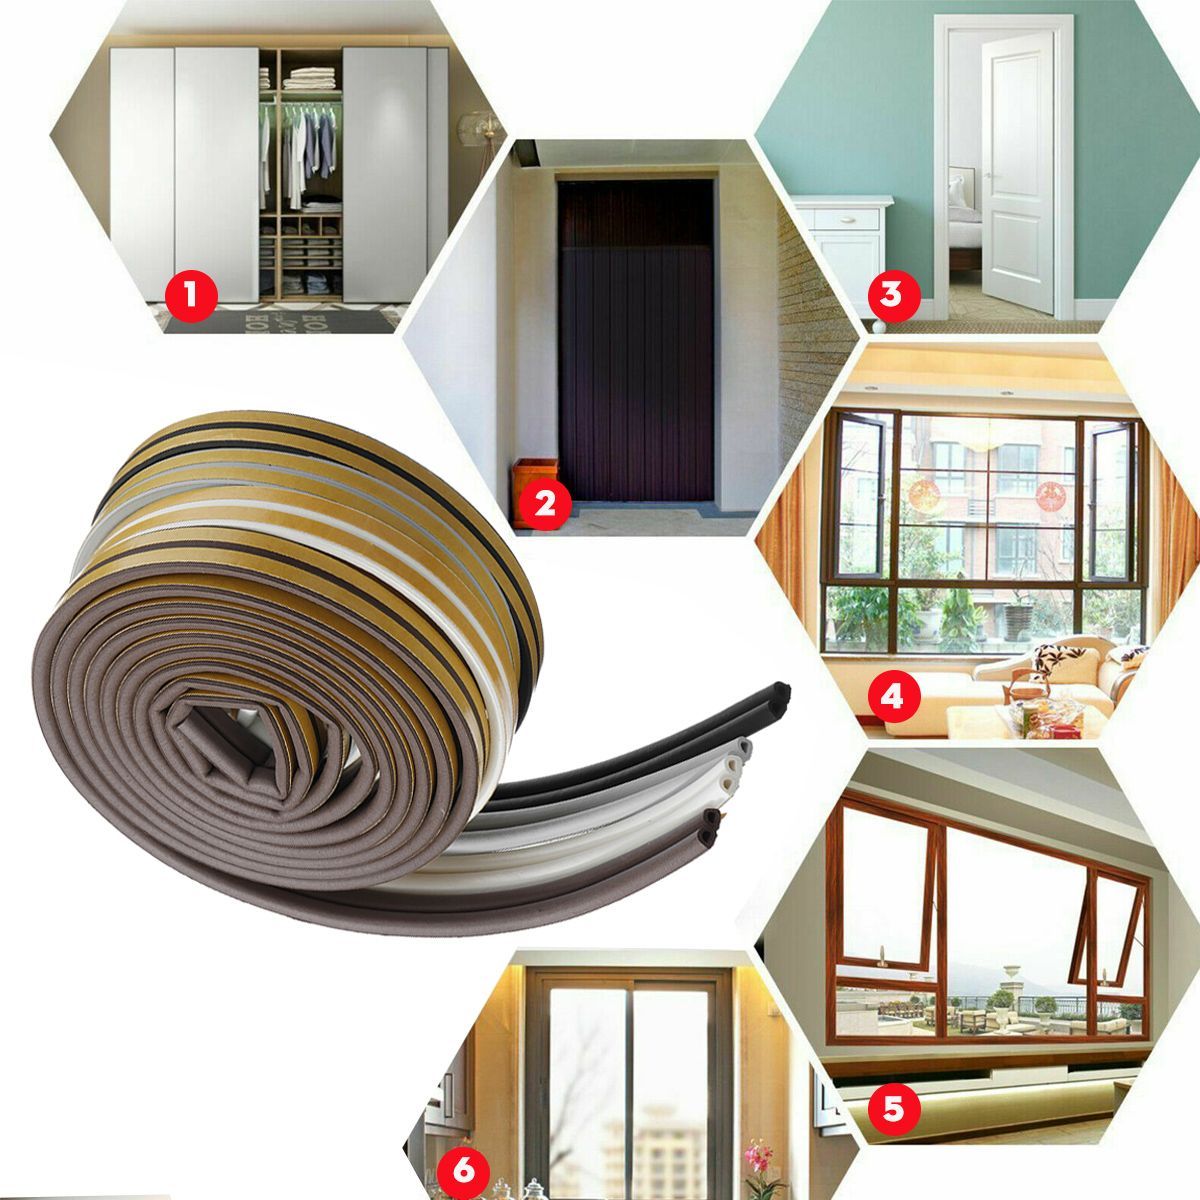 D-Shape-Door-Window-Seal-Strip-Draught-Excluder-Self-Adhesive-Rubber-Roll-Foam-1680334